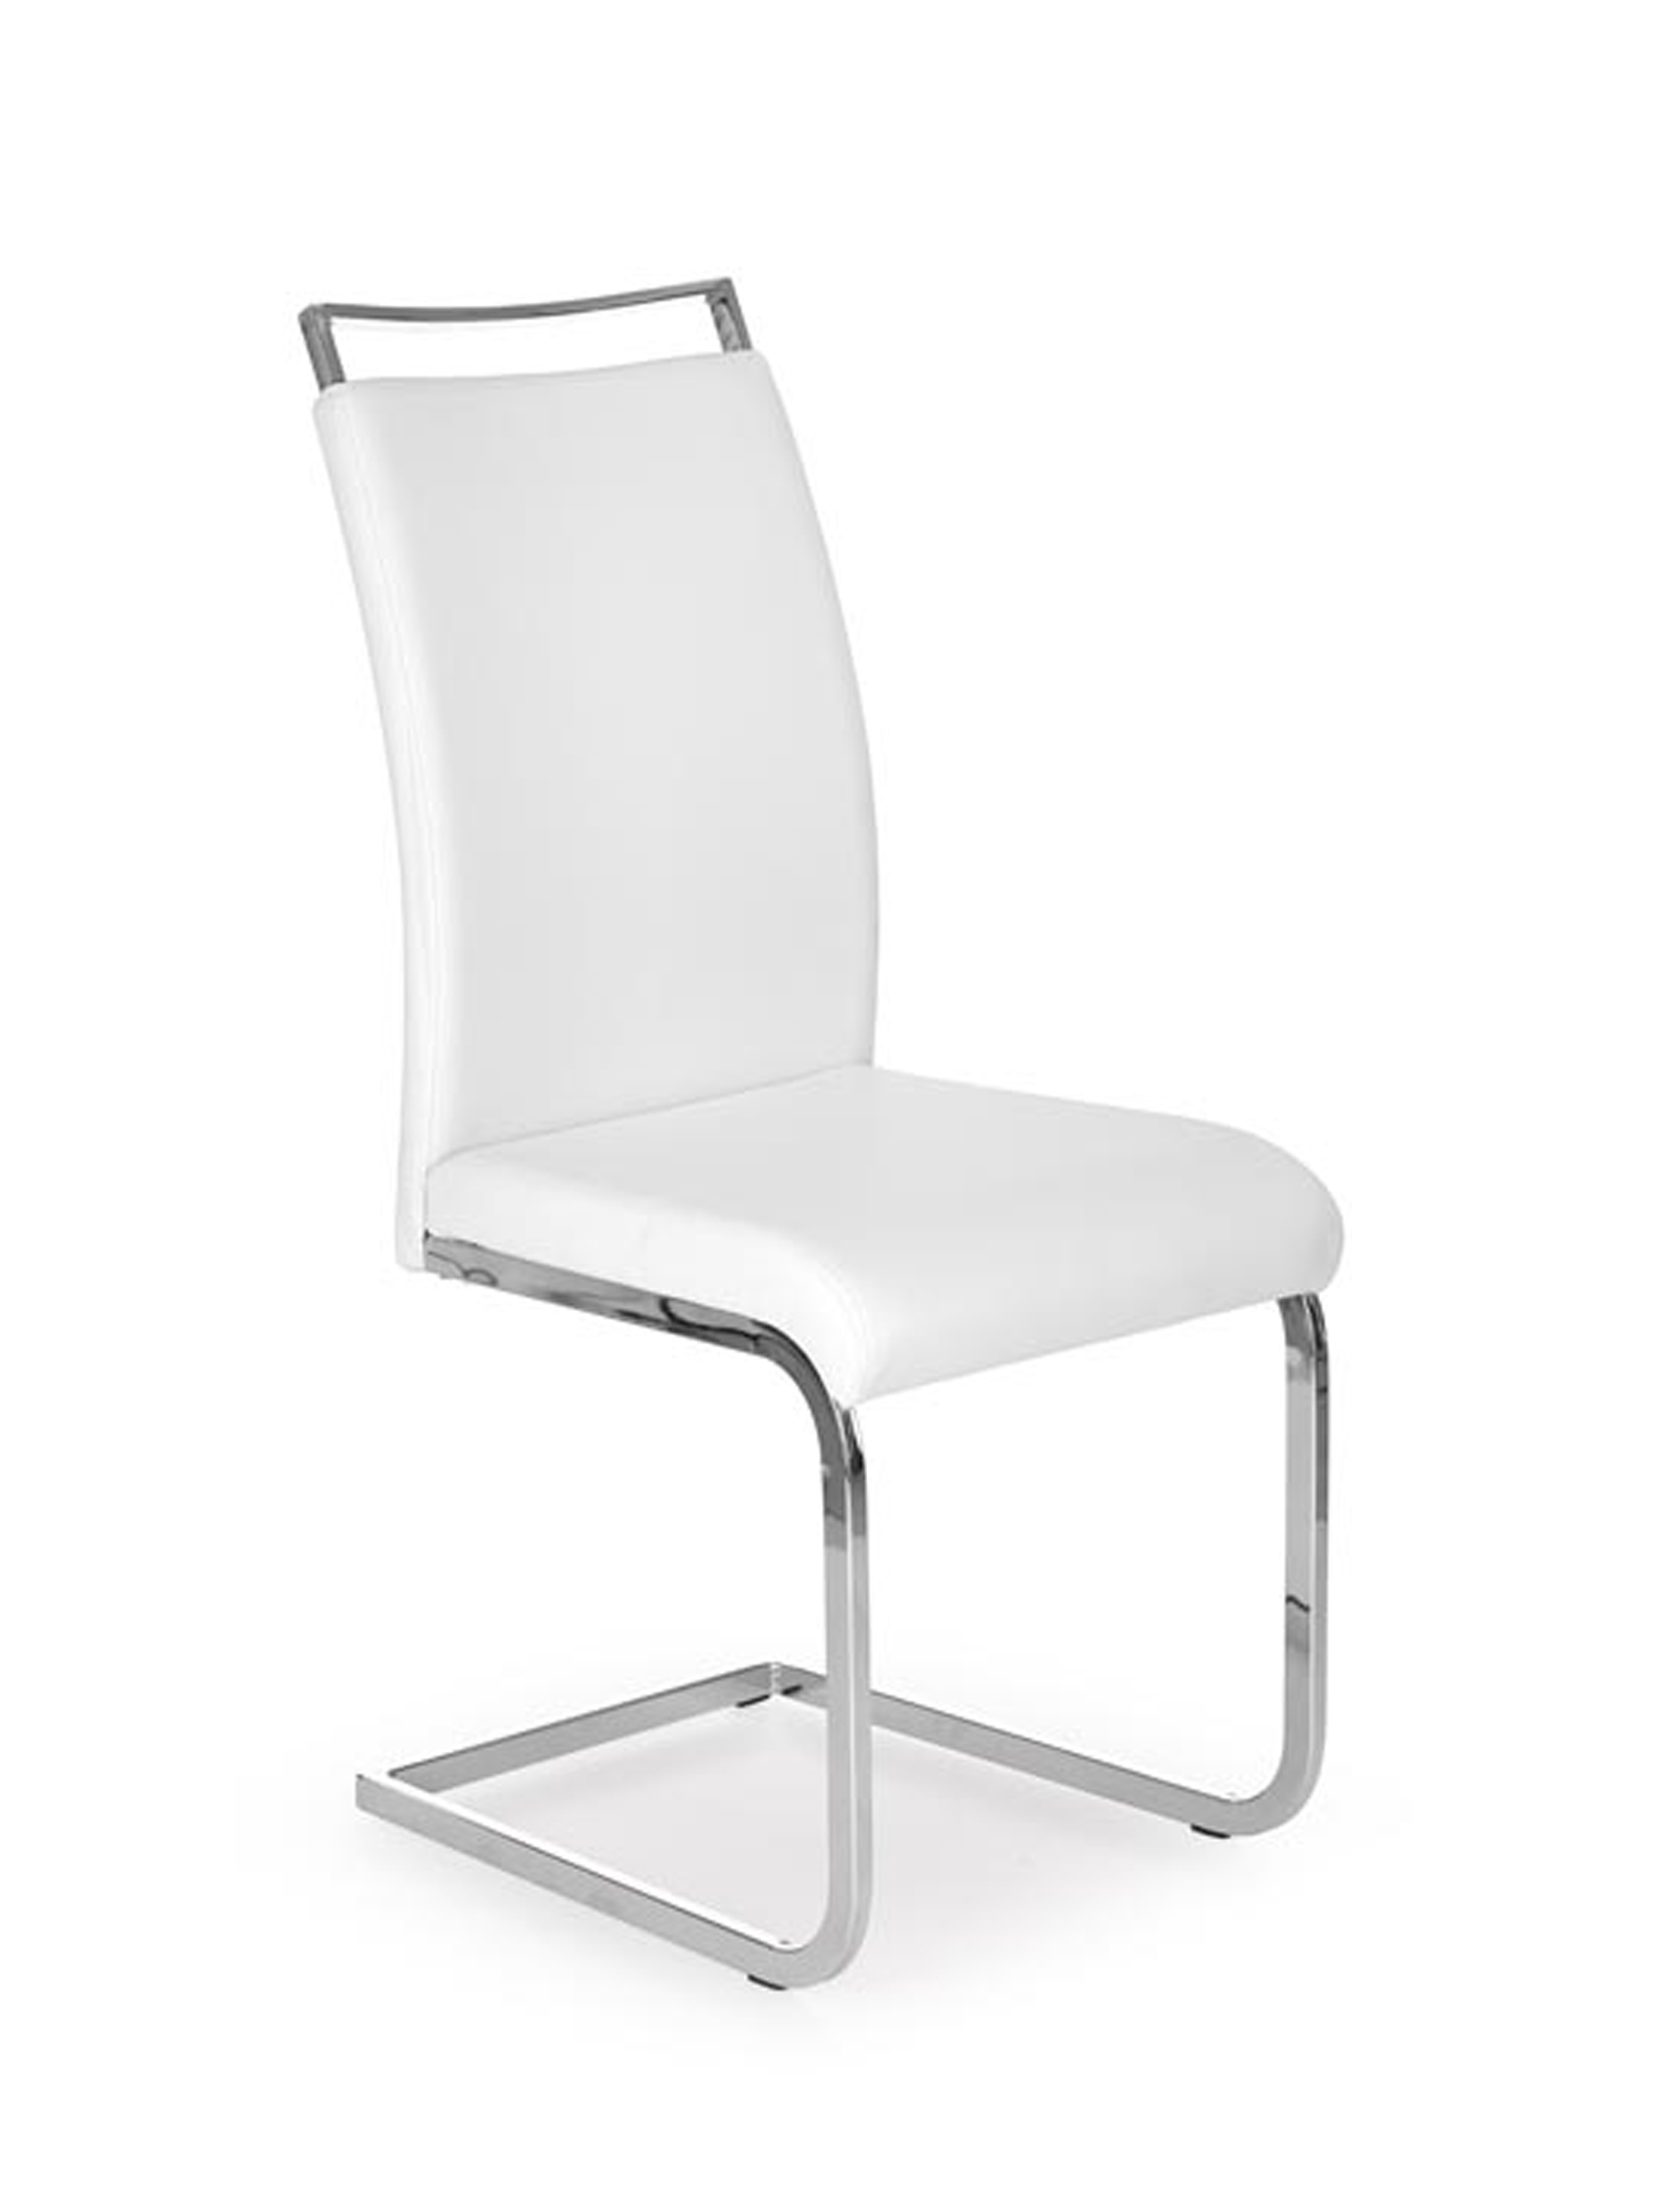 Židle K250 - Bílá Židle k250 - Bílá